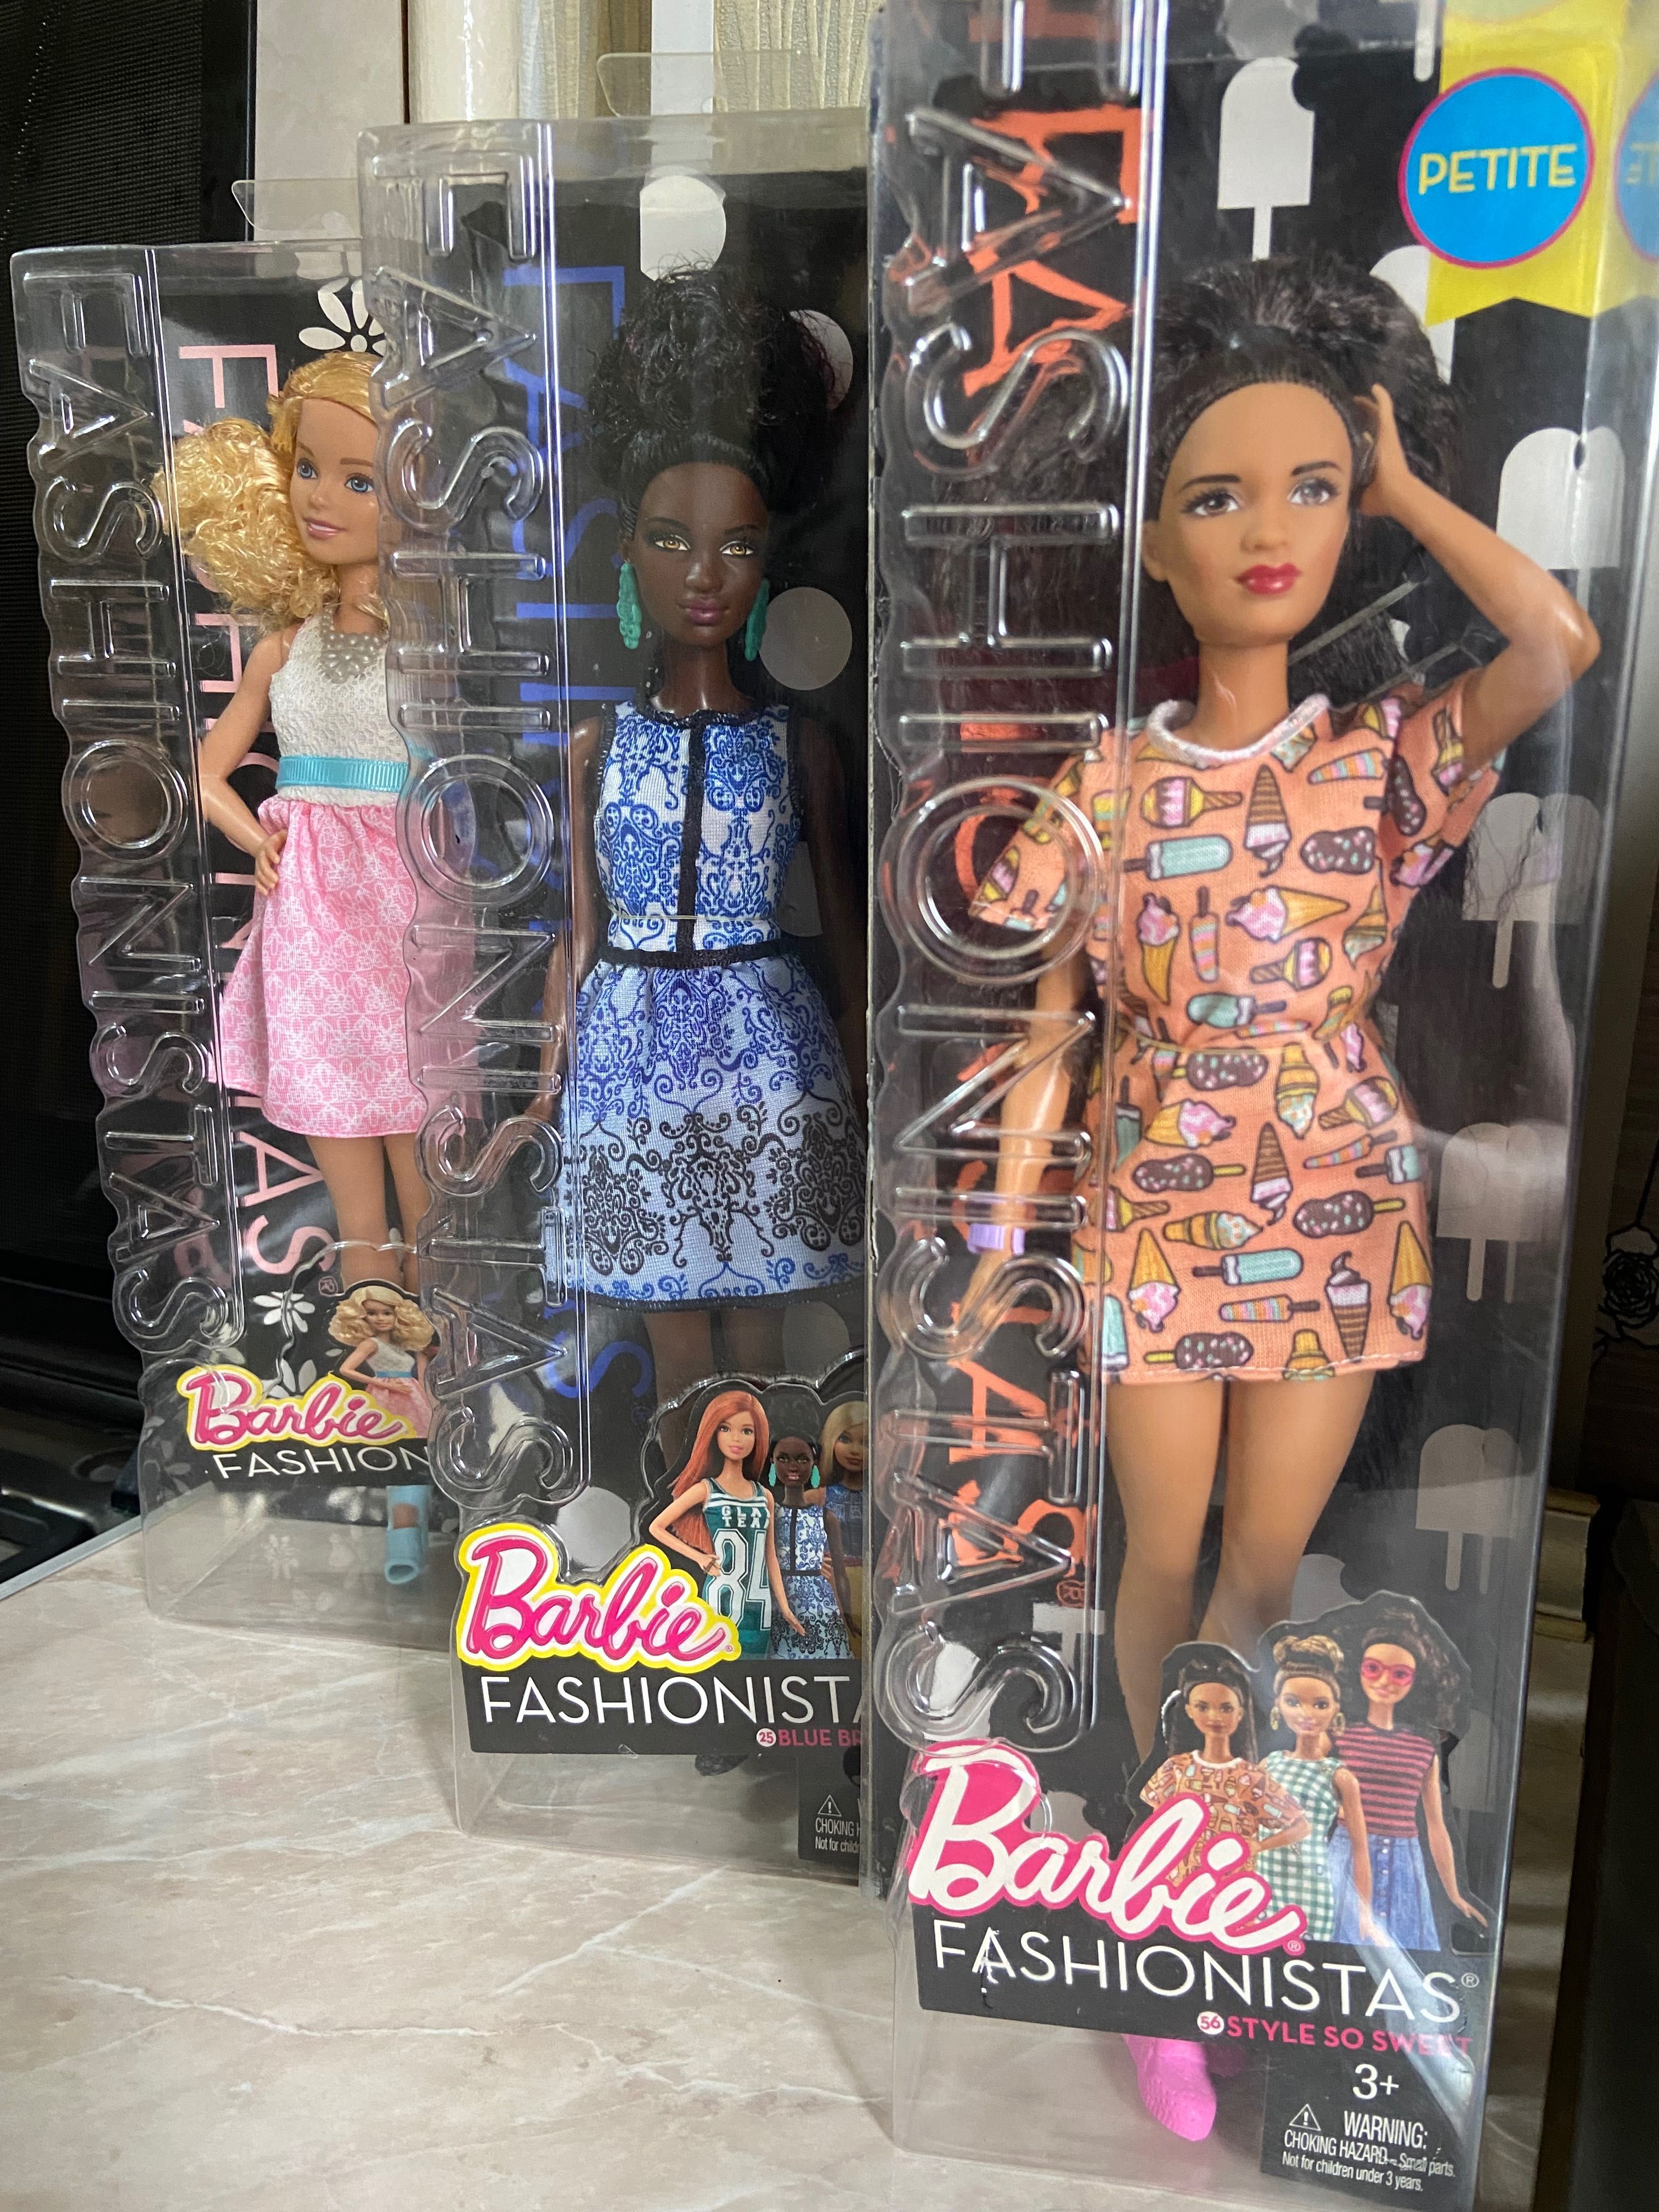 🕺💃 Обработай своё фото в стиле Barbie! — Офтоп на taimyr-expo.ru